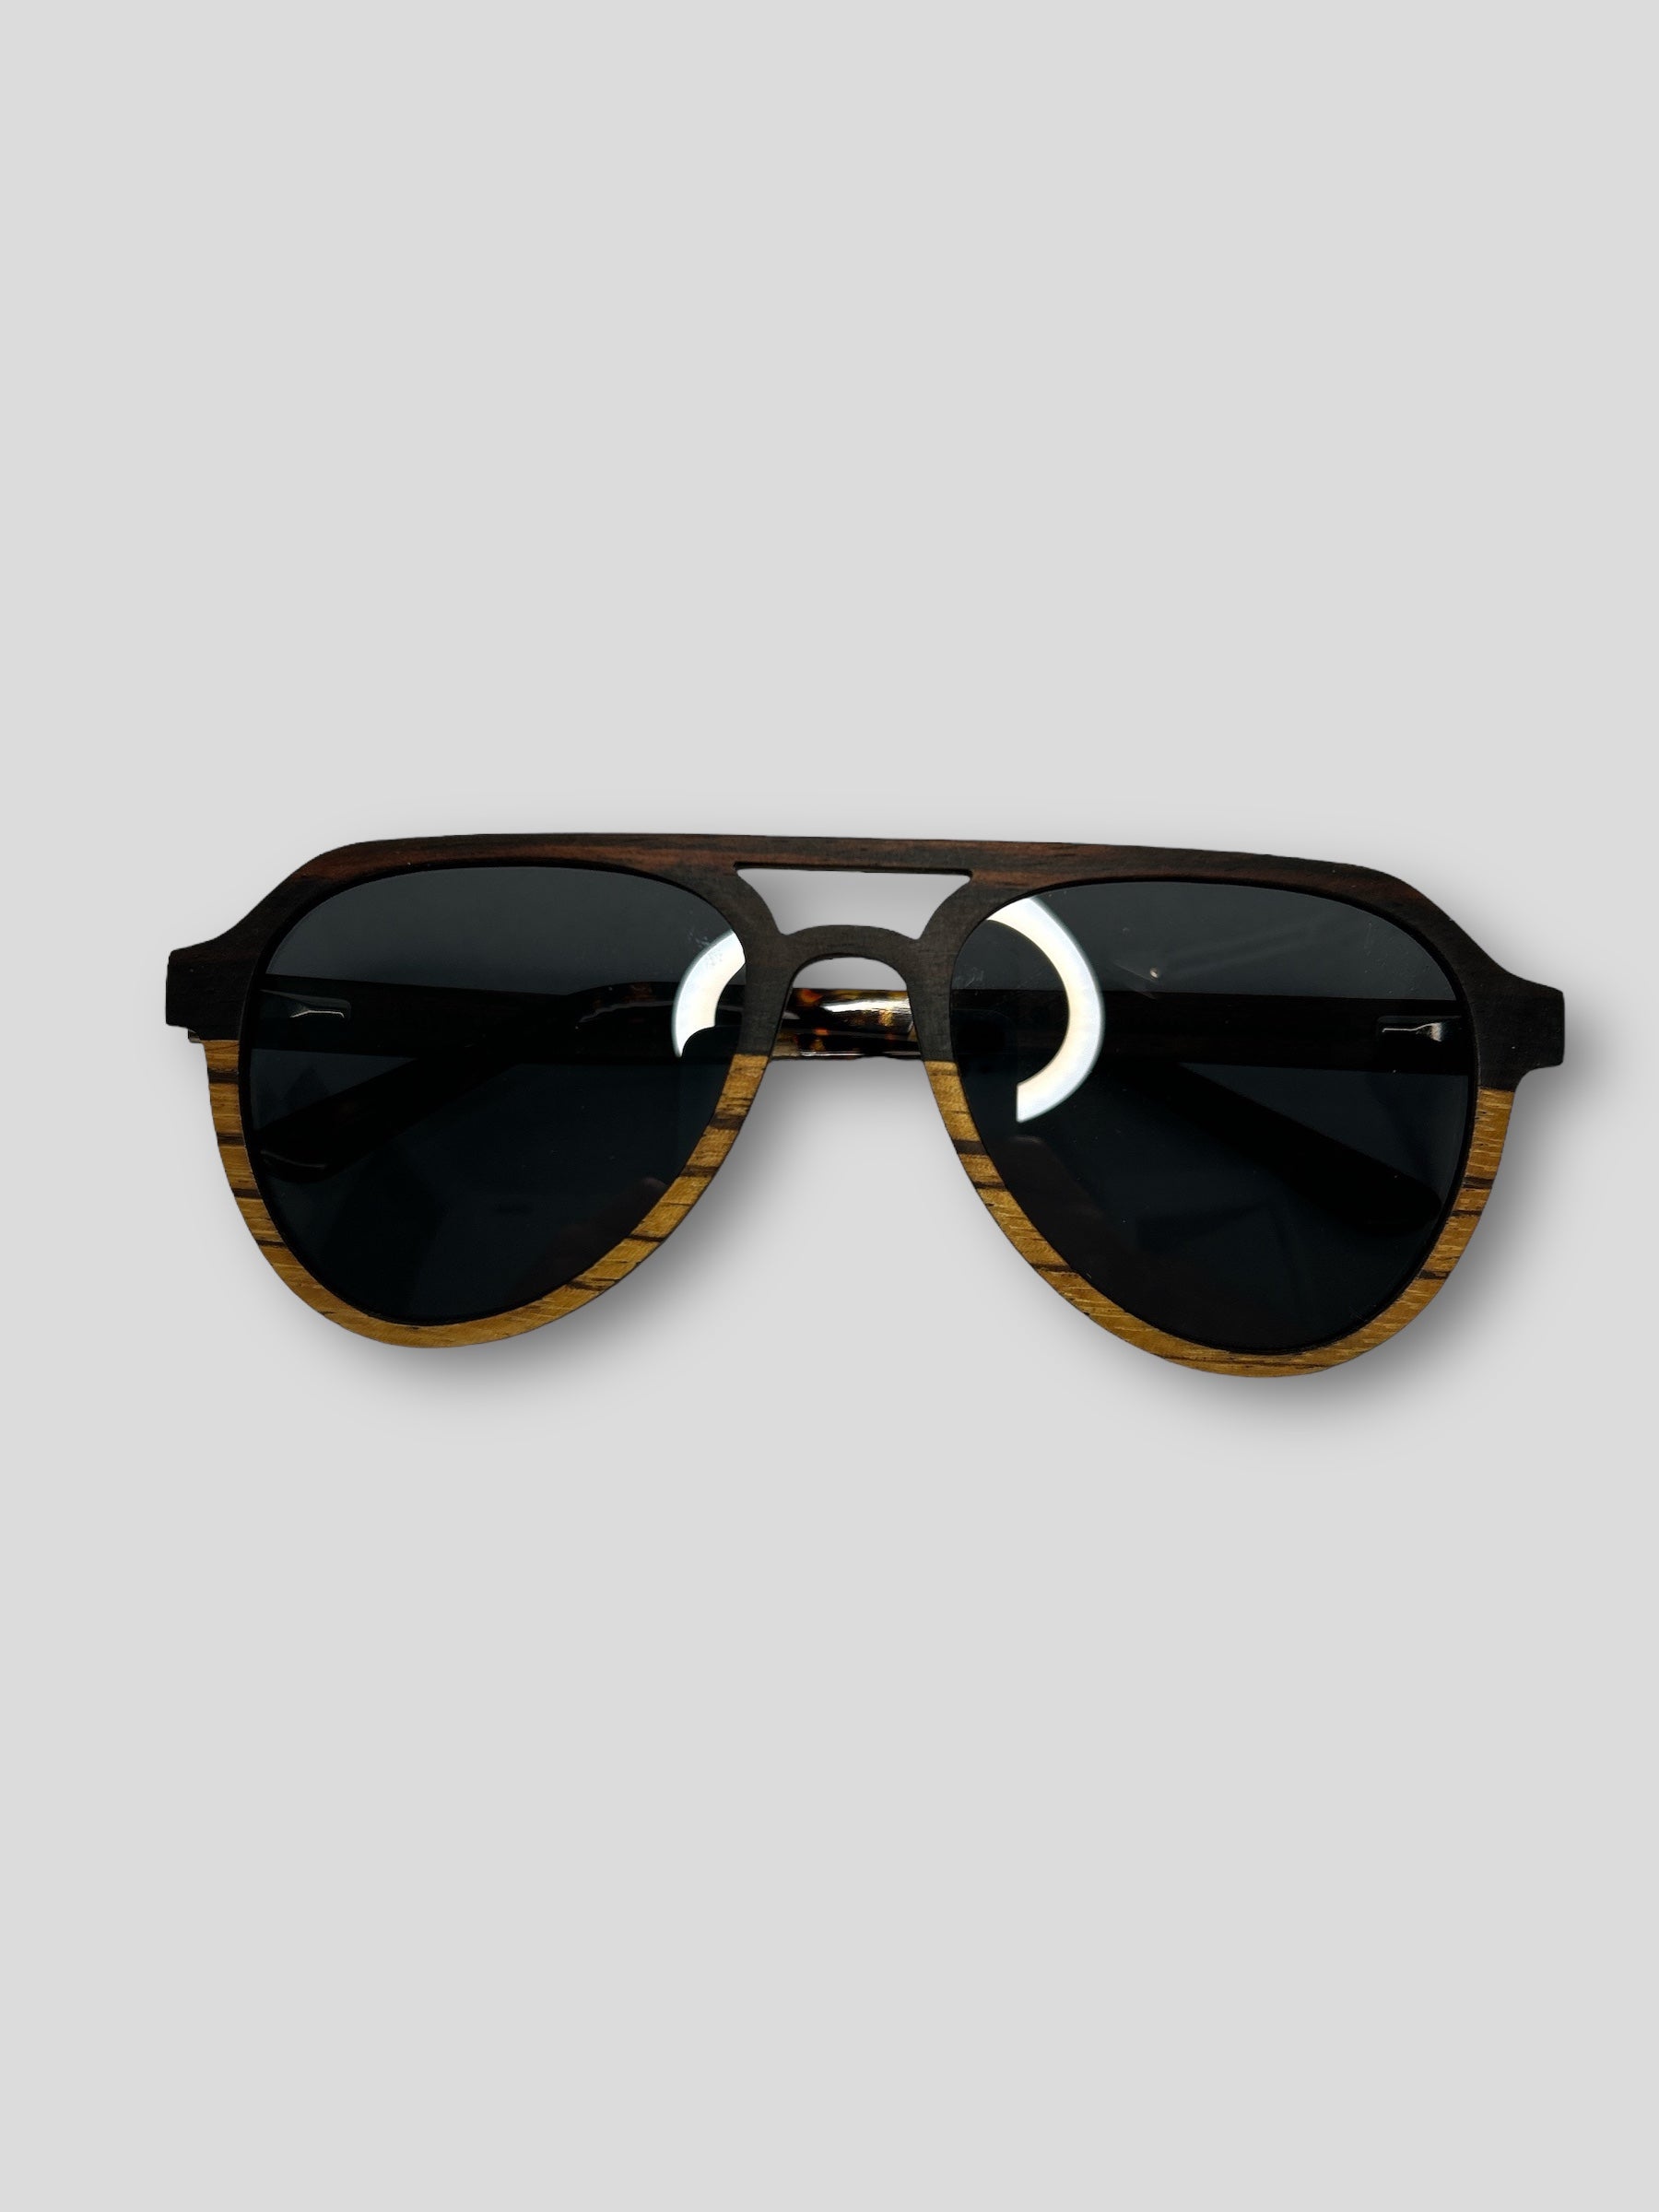 Venice Beach Sunglasses